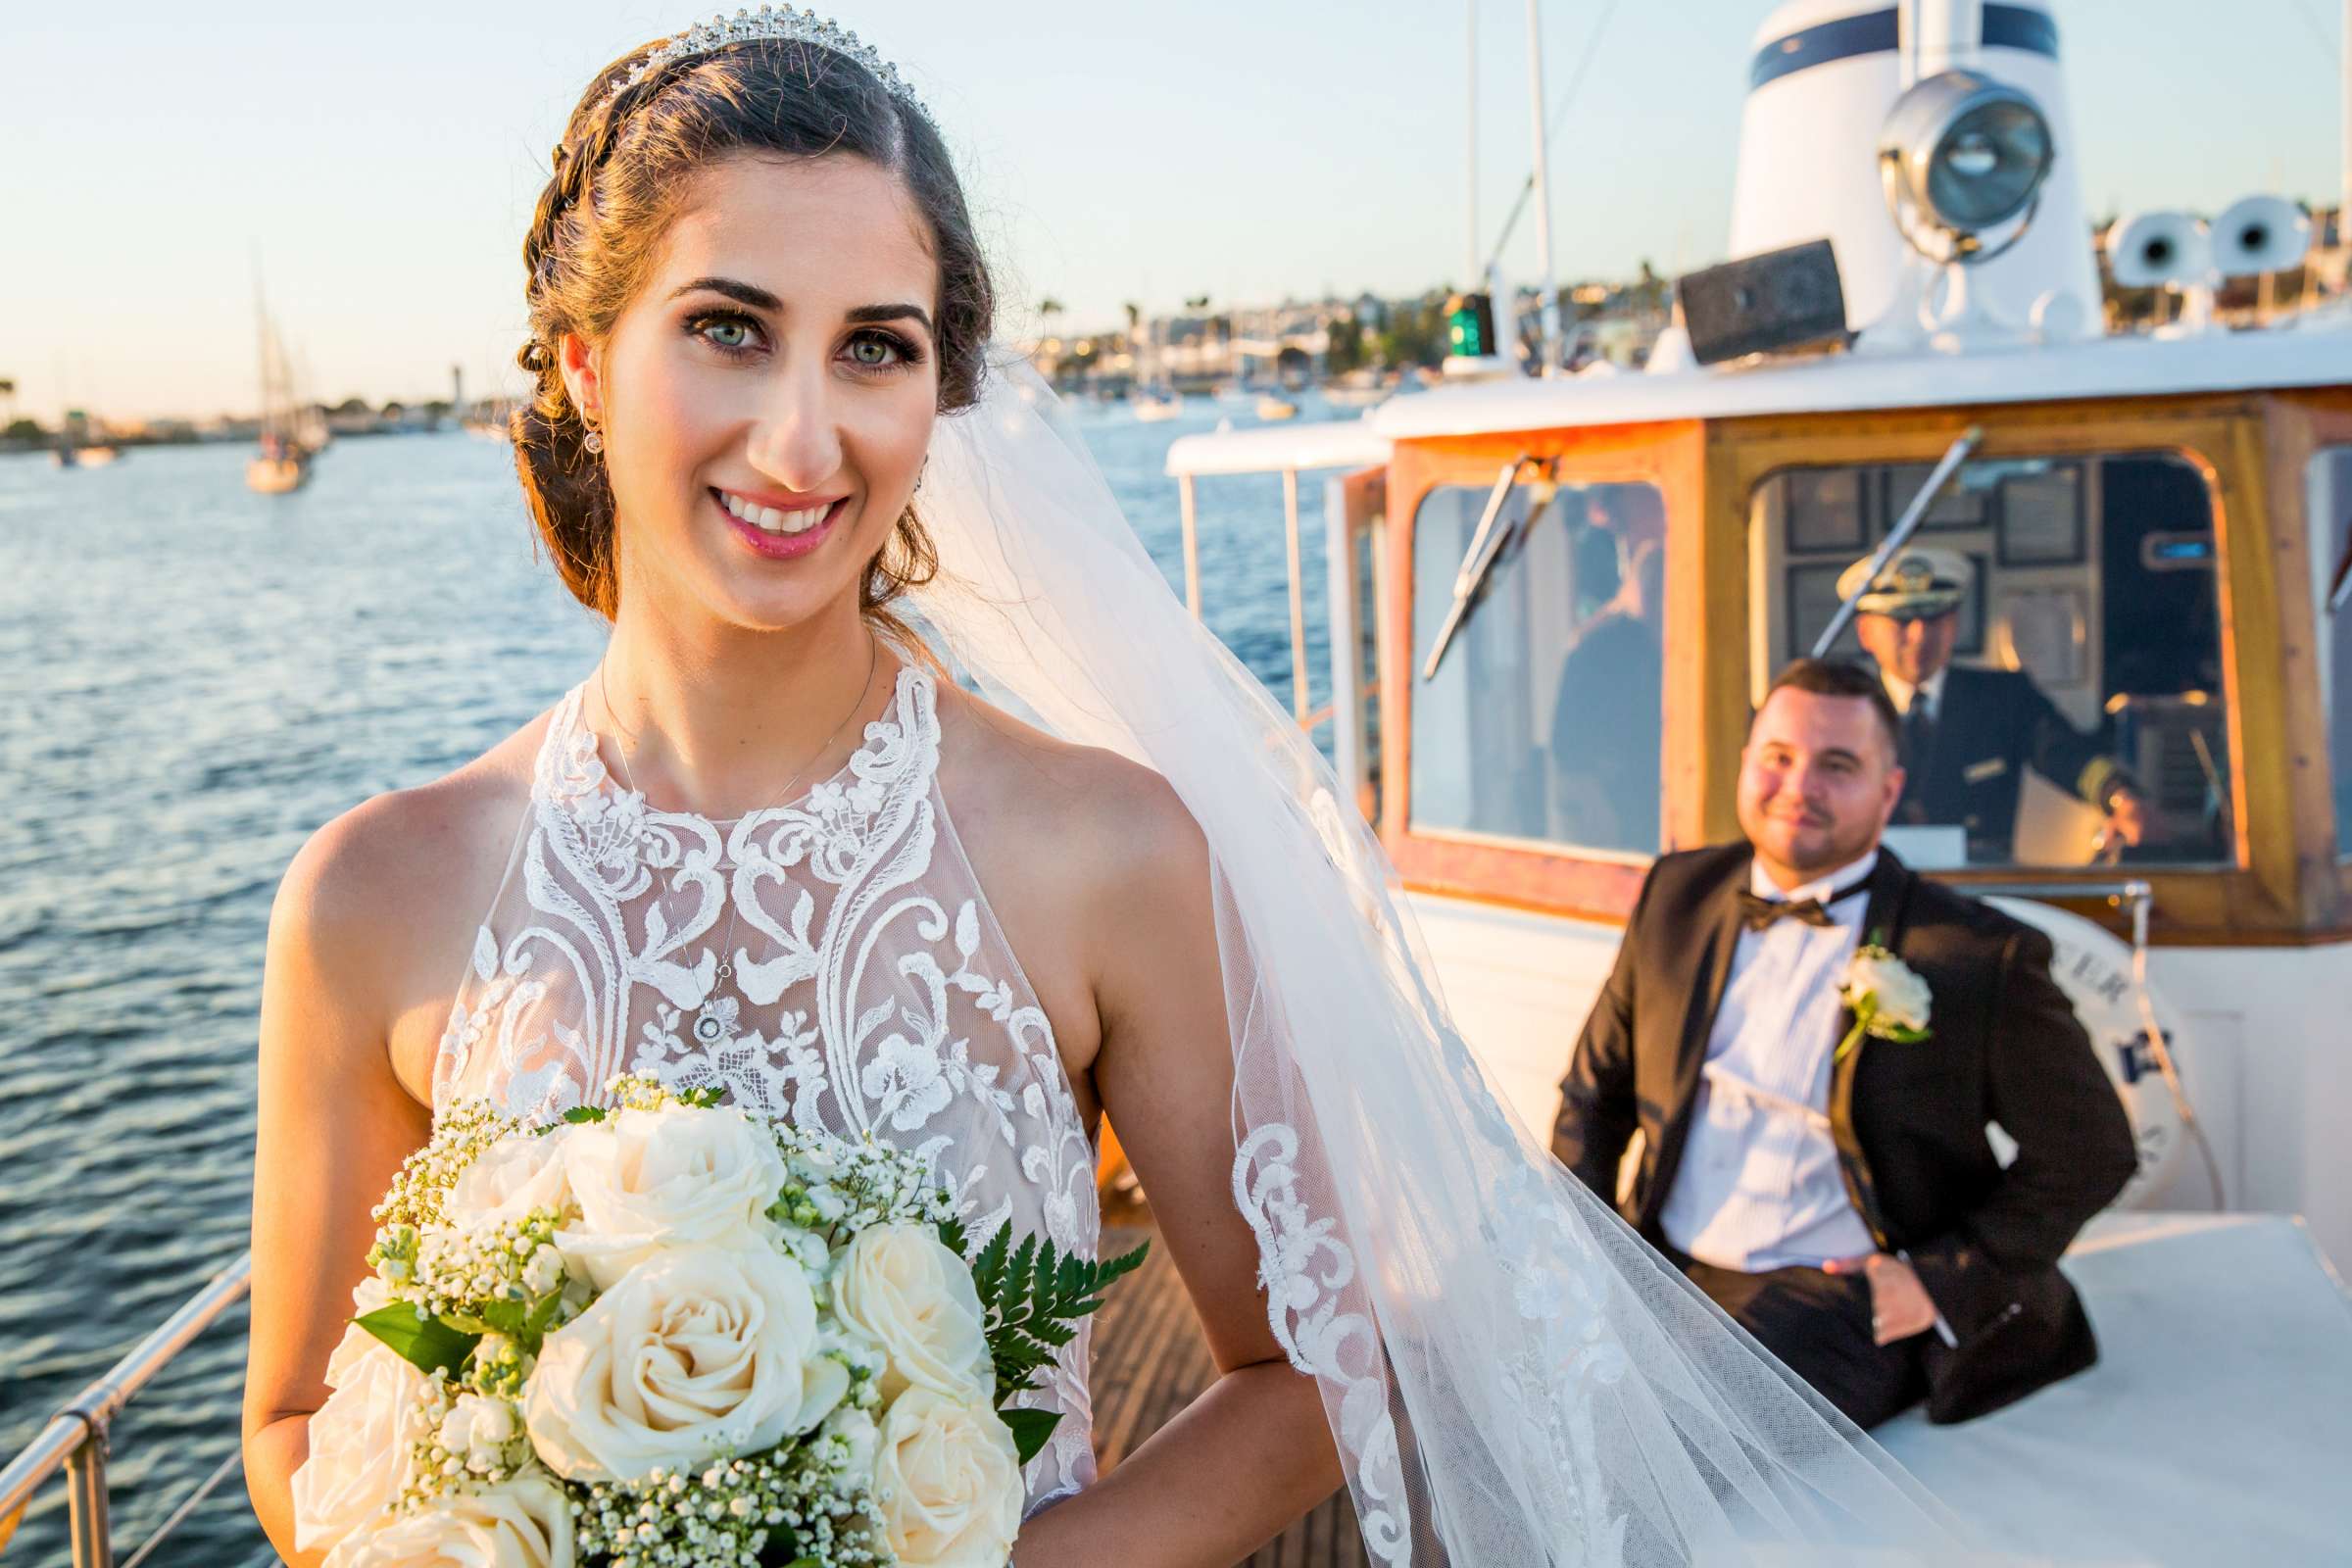 Hornblower cruise line Wedding, Leena and Daniel Wedding Photo #5 by True Photography